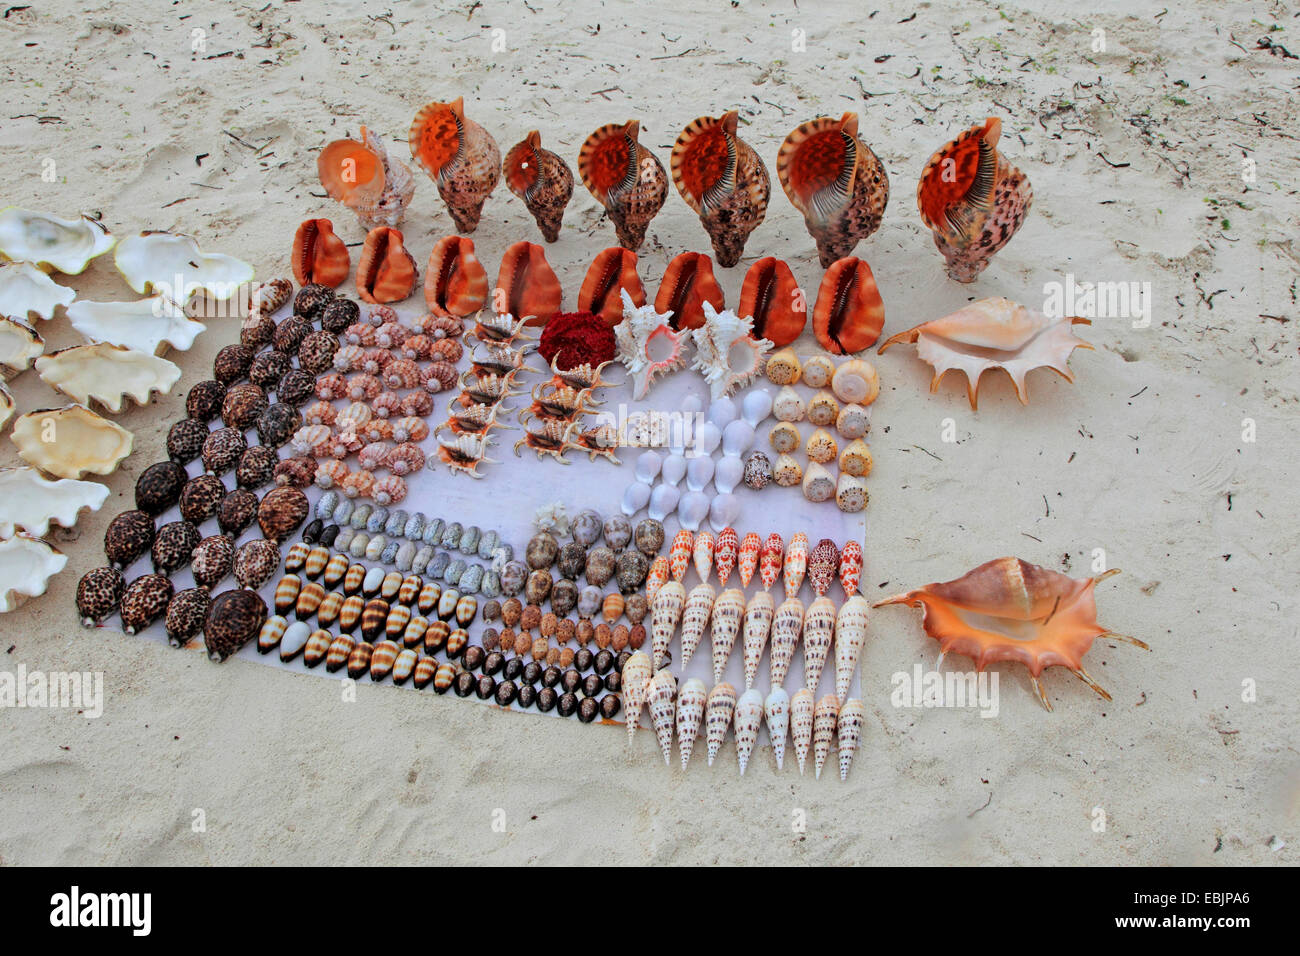 collected conchs, seashells and snail-shells on sandy beach, Tanzania, Sansibar Stock Photo